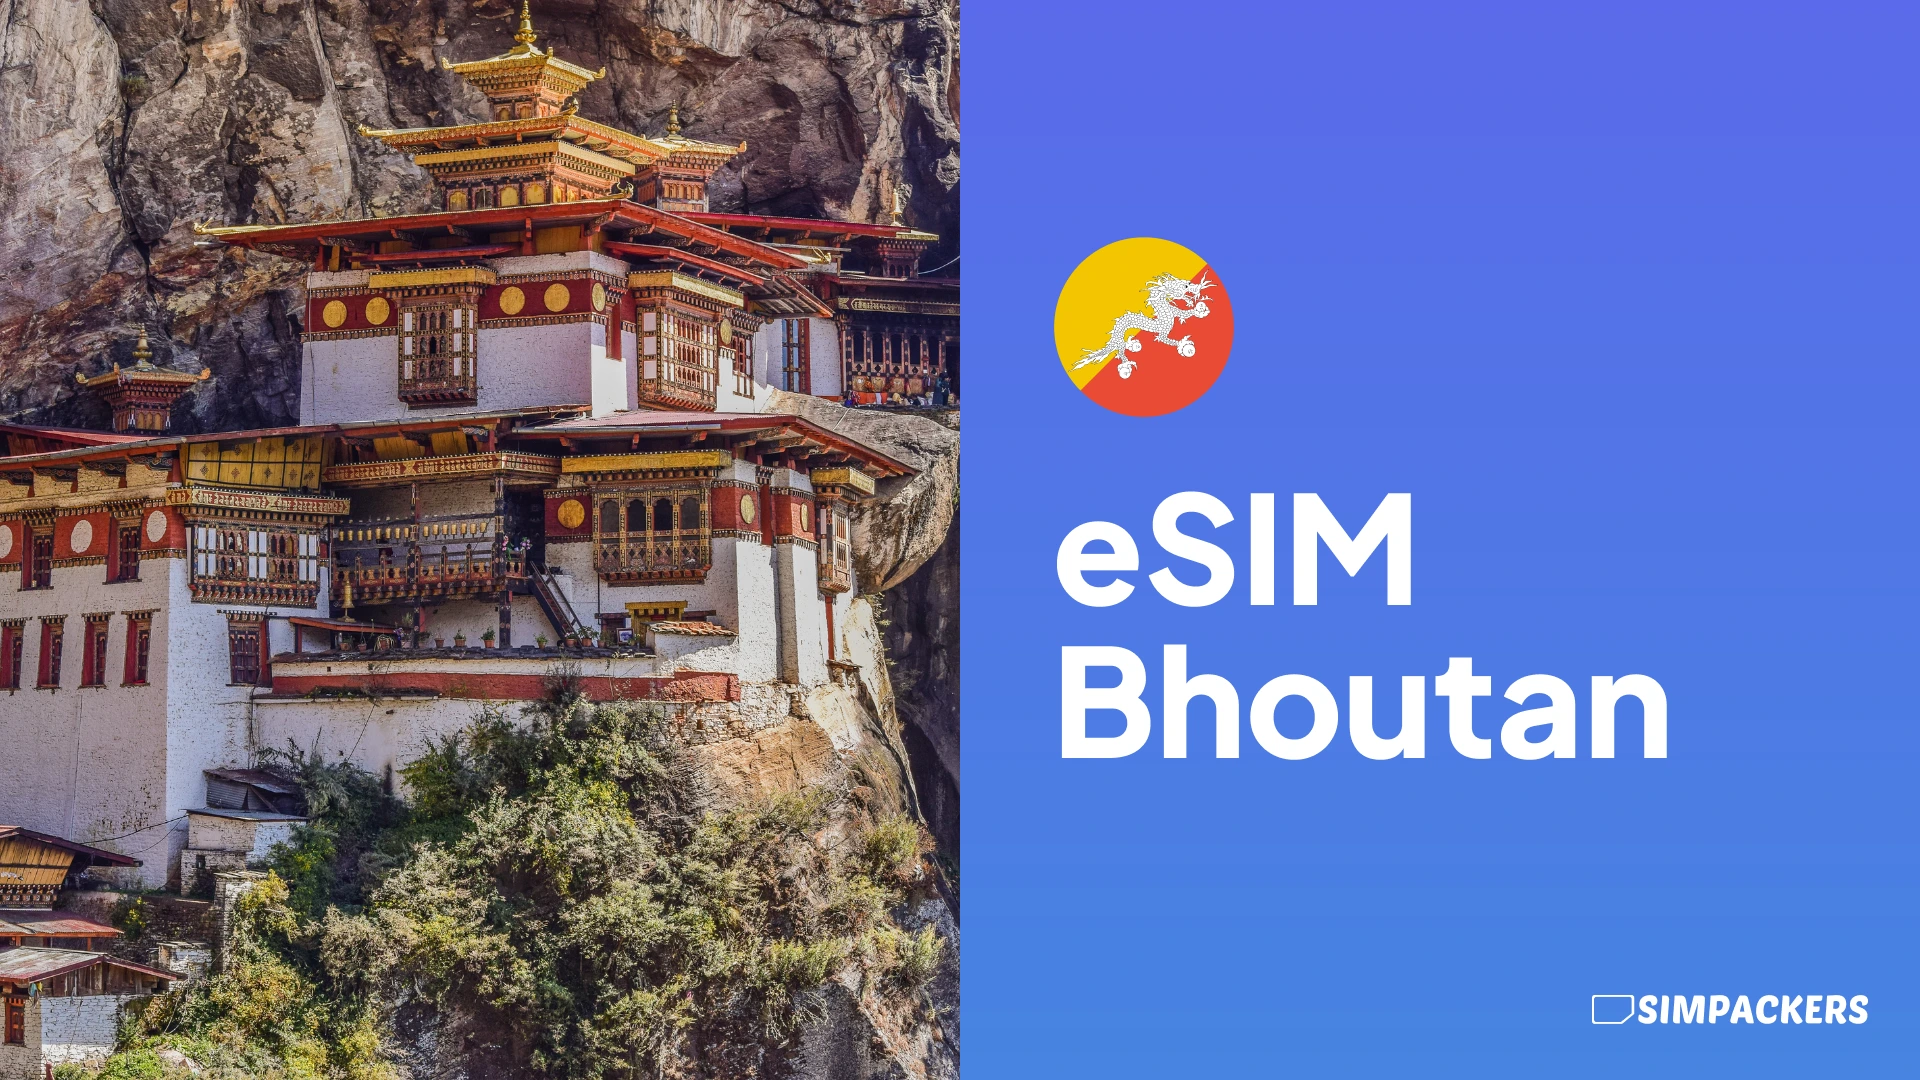 FR/FEATURED_IMAGES/esim-bhoutan.webp